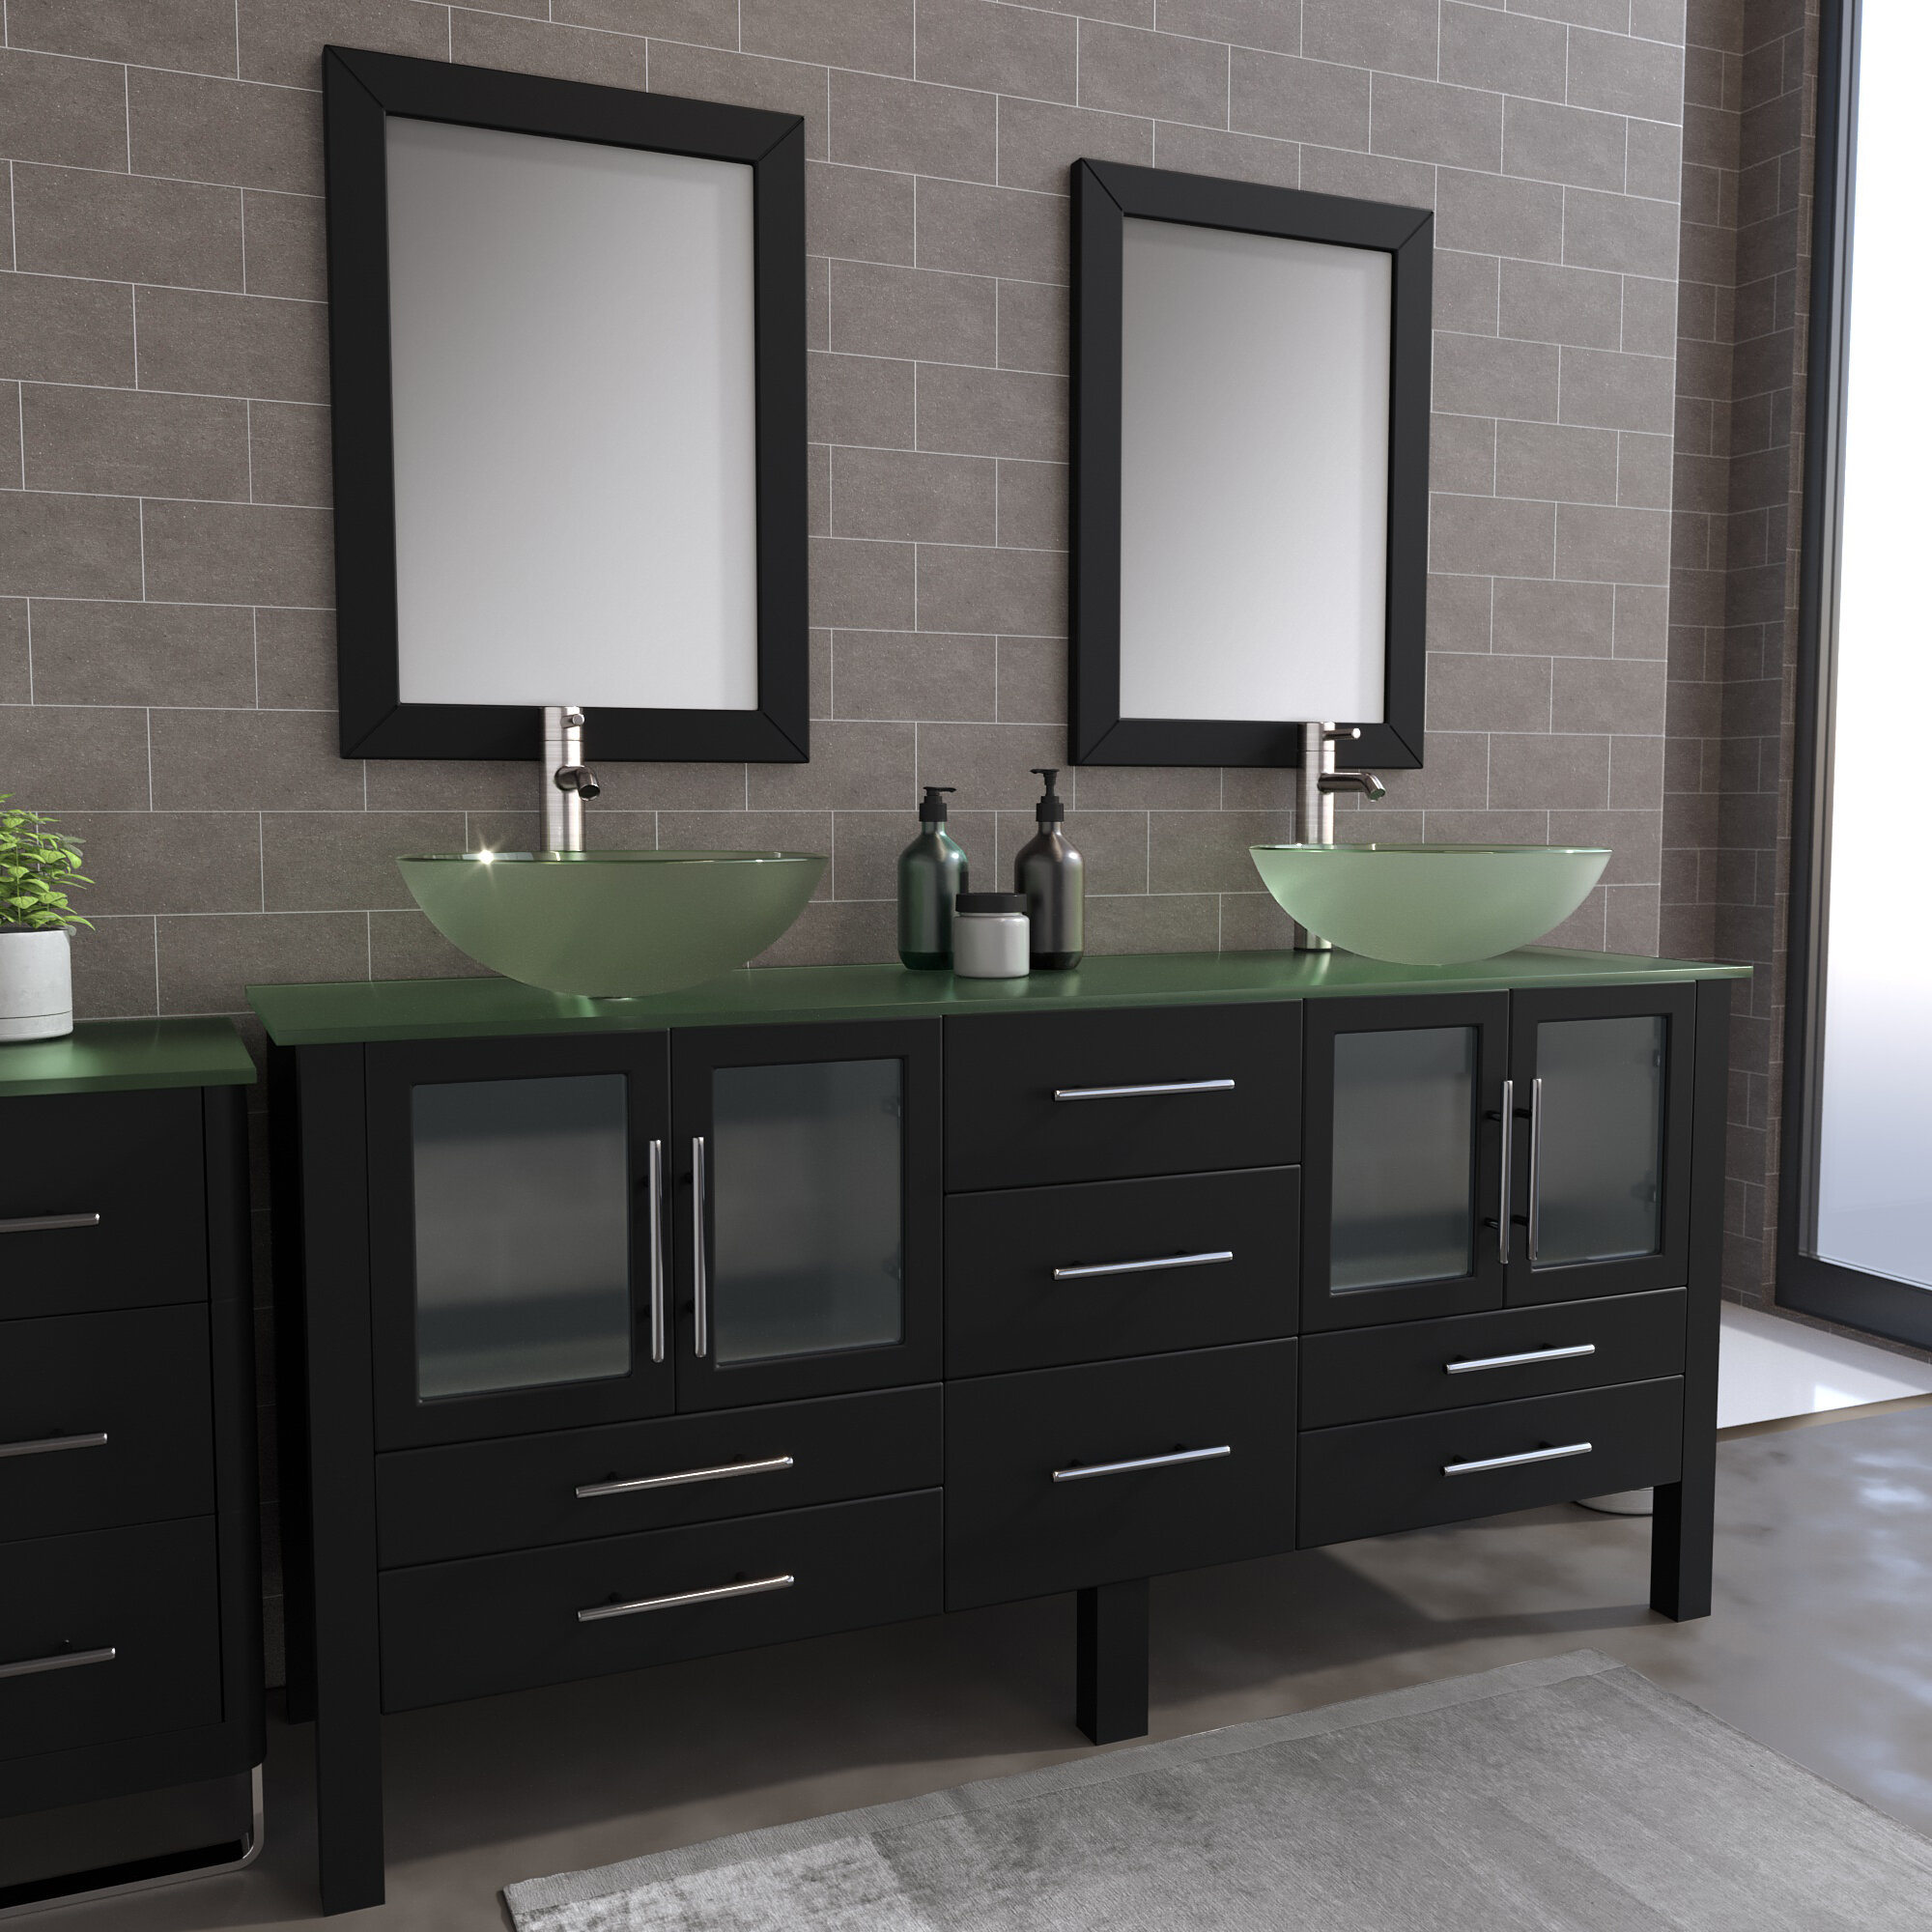 Brayden Studio Meserve Solid Wood And Frosted Glass Vessel 71 Double Bathroom Vanity Set With Mirror Reviews Wayfair